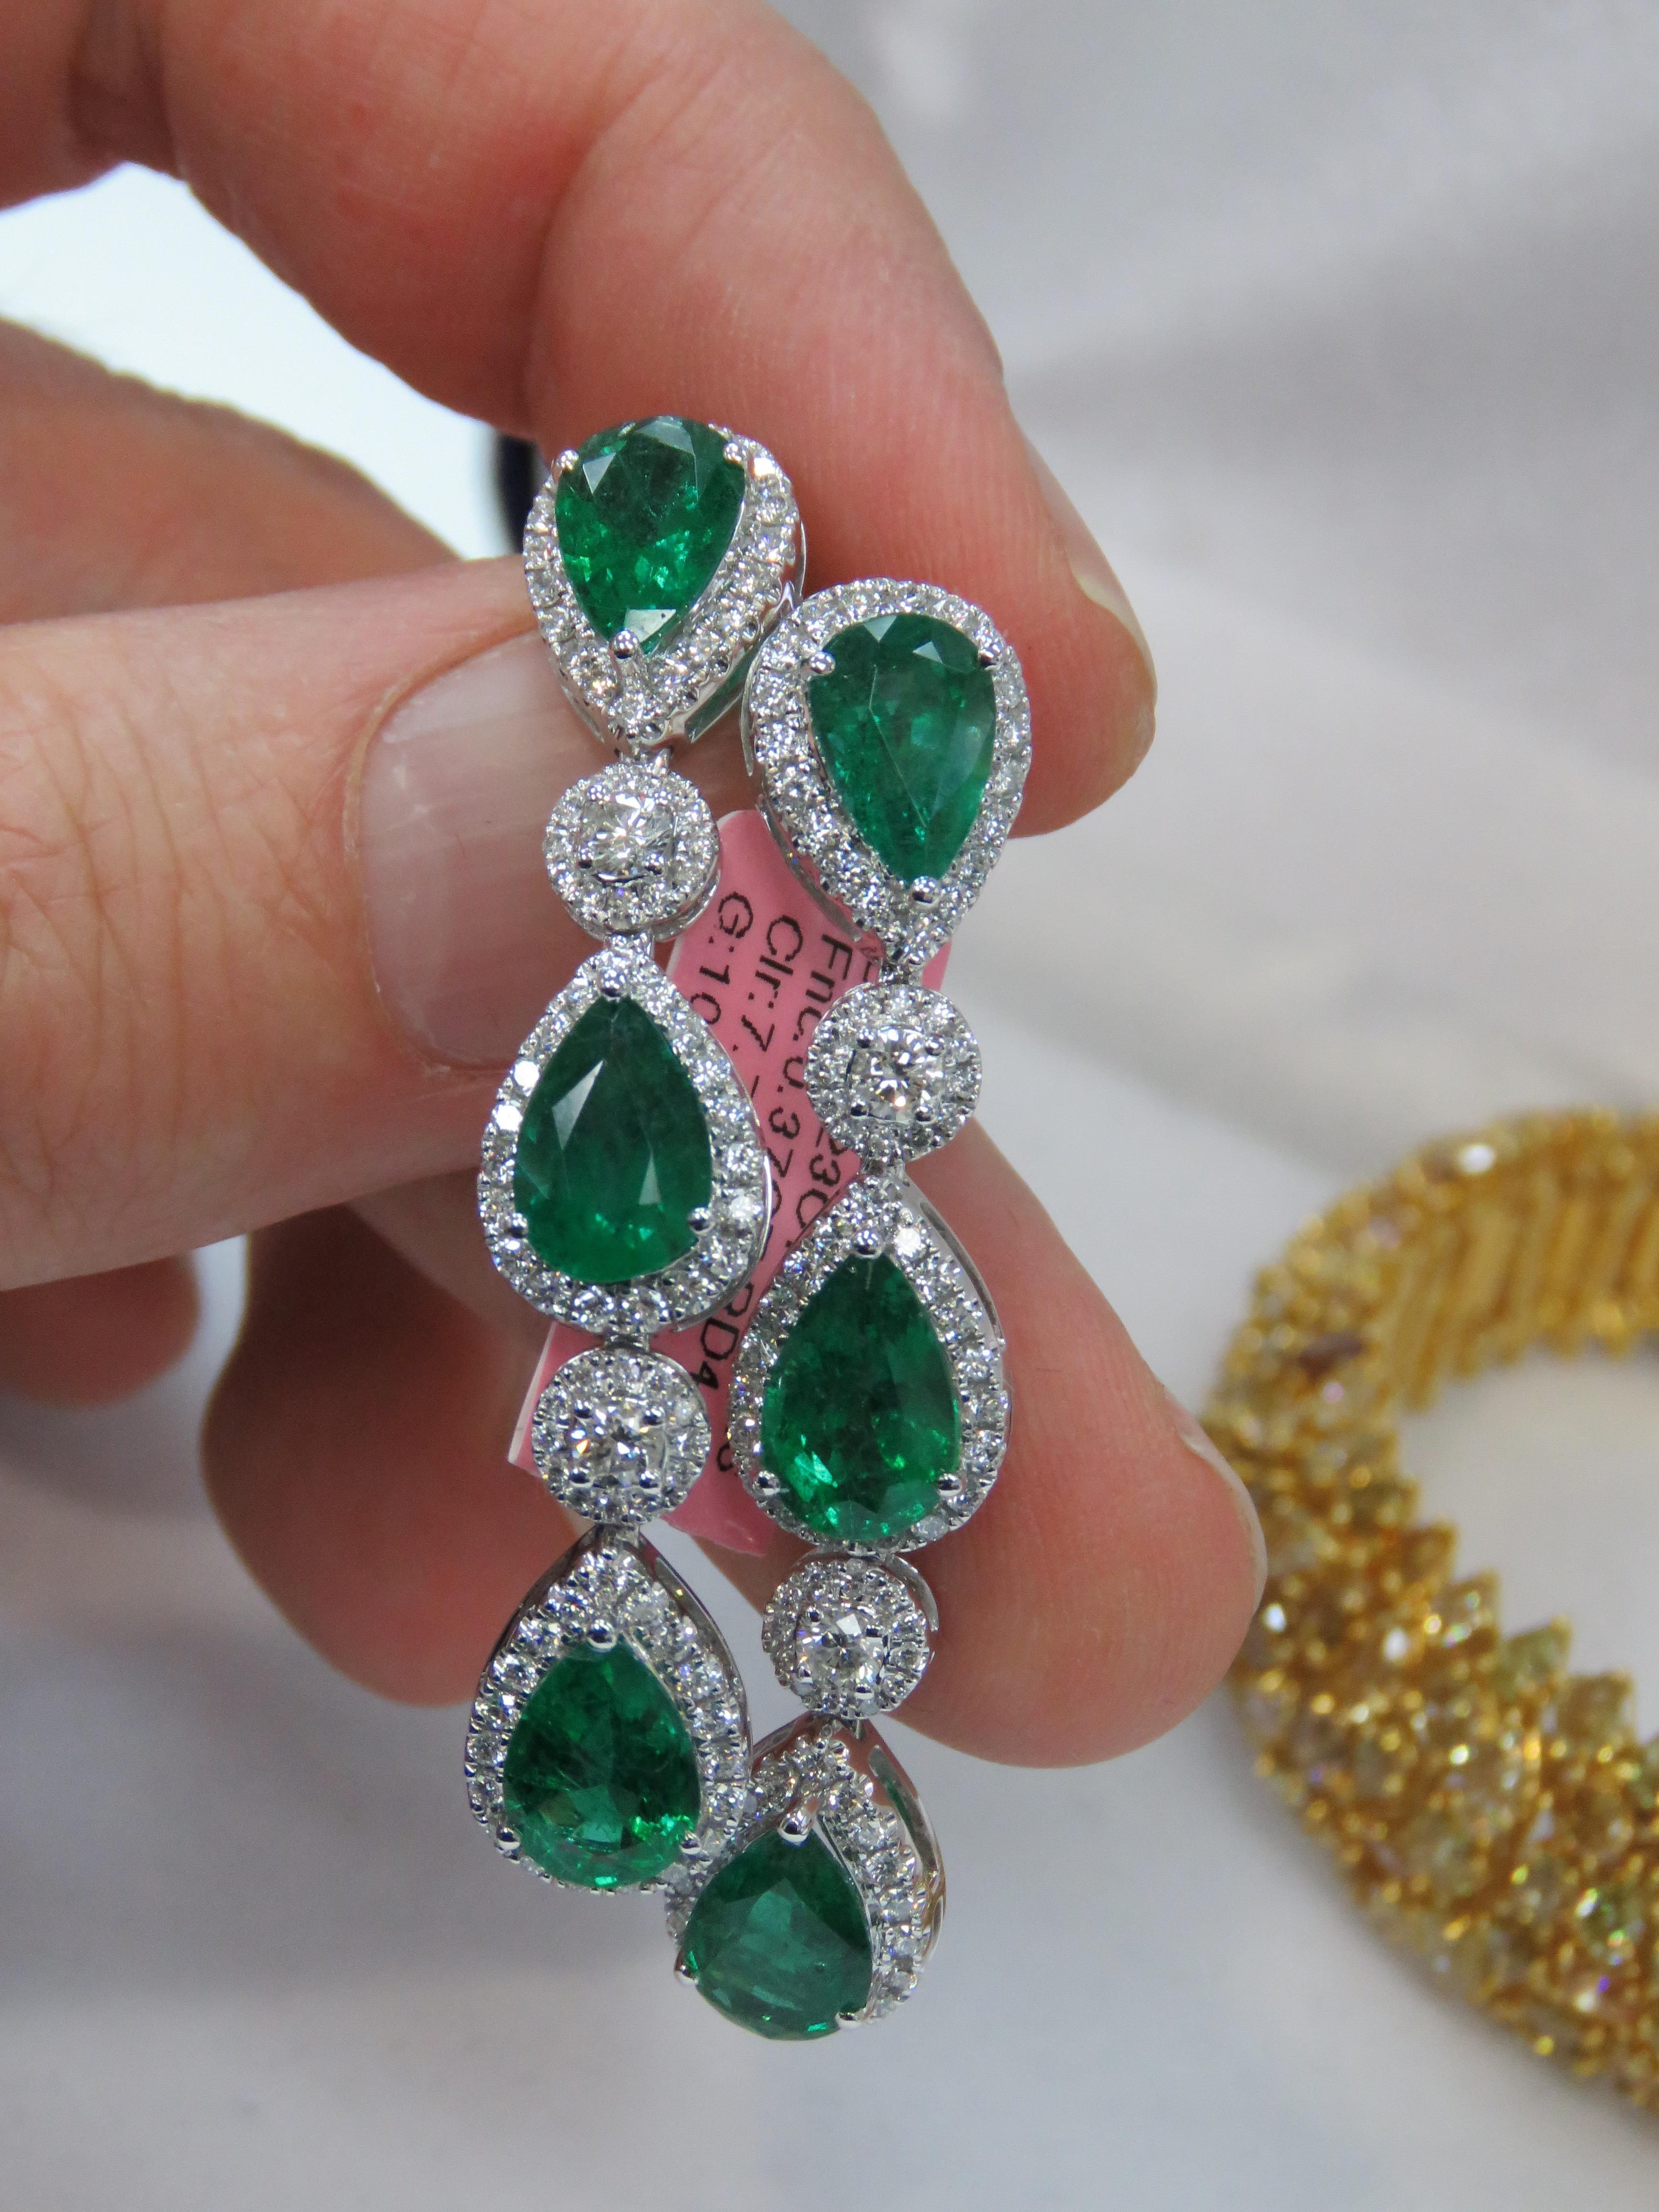 NEU $73, 735 18KT Gold glitzernde Fancy Grüner Smaragd-Diamant-Ohrringe (Smaragdschliff) im Angebot